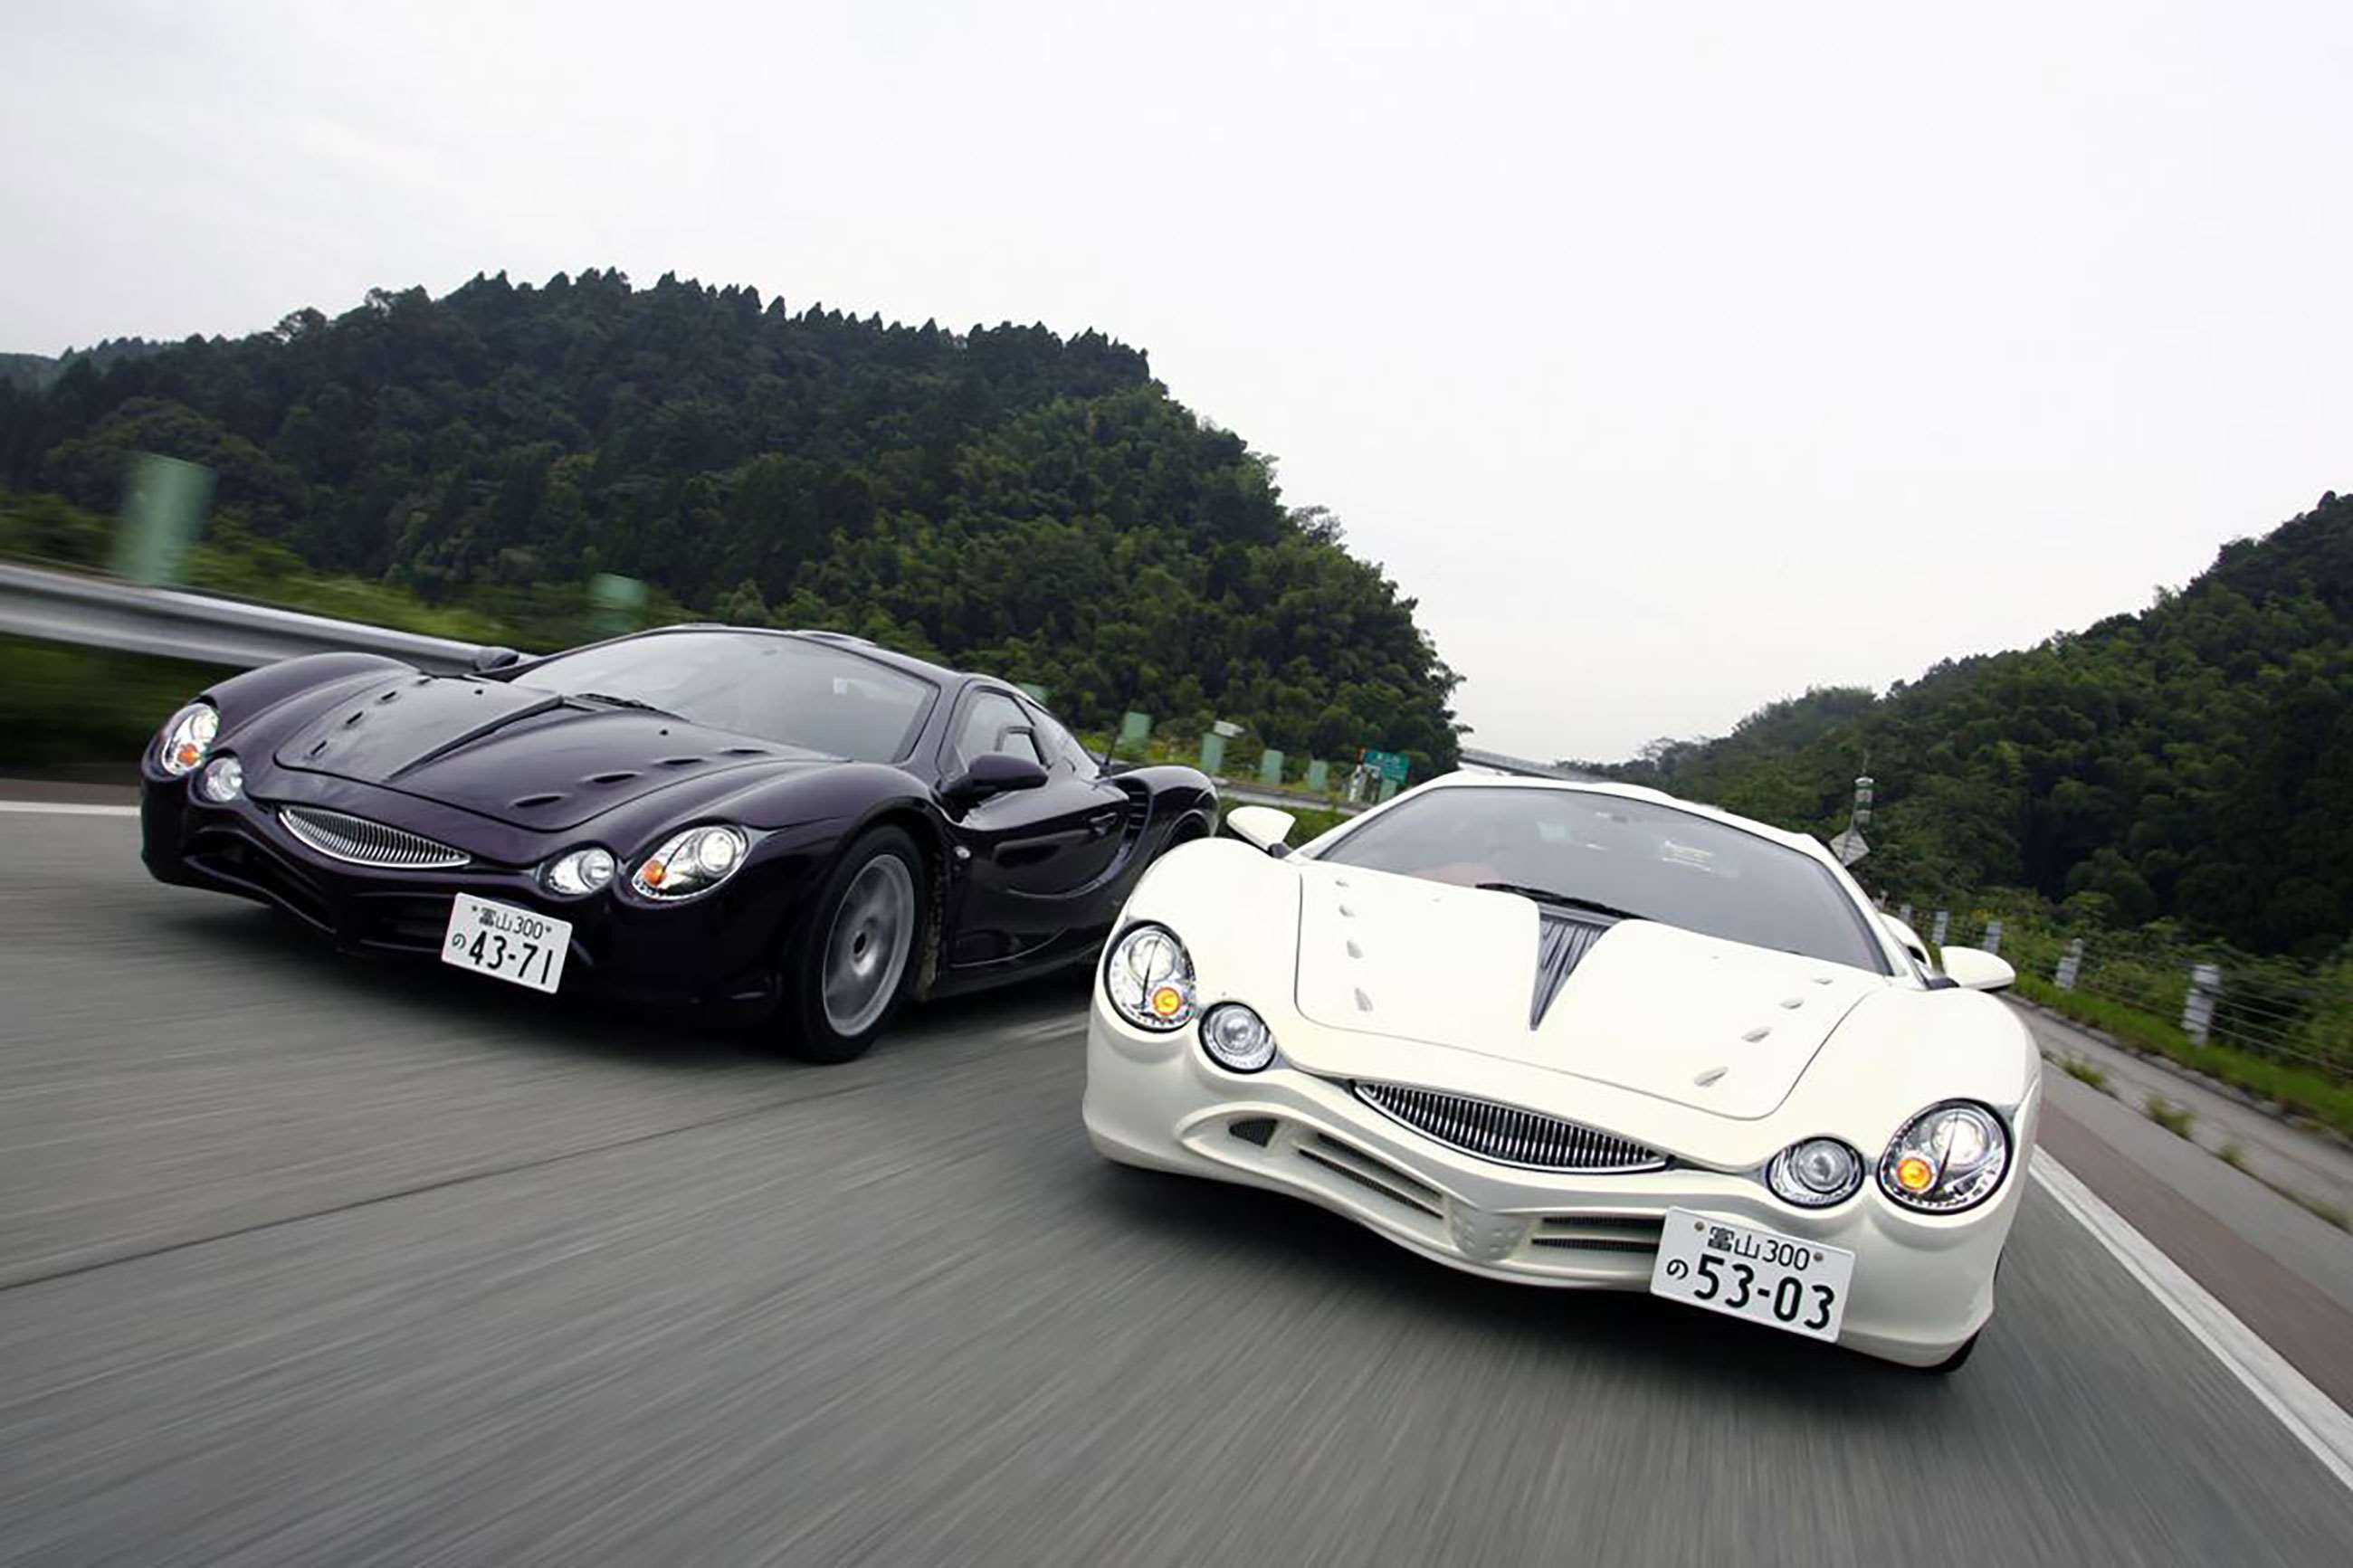 craziest-car-designs-ever-1-mitsuoka-orochi-03022022.jpg